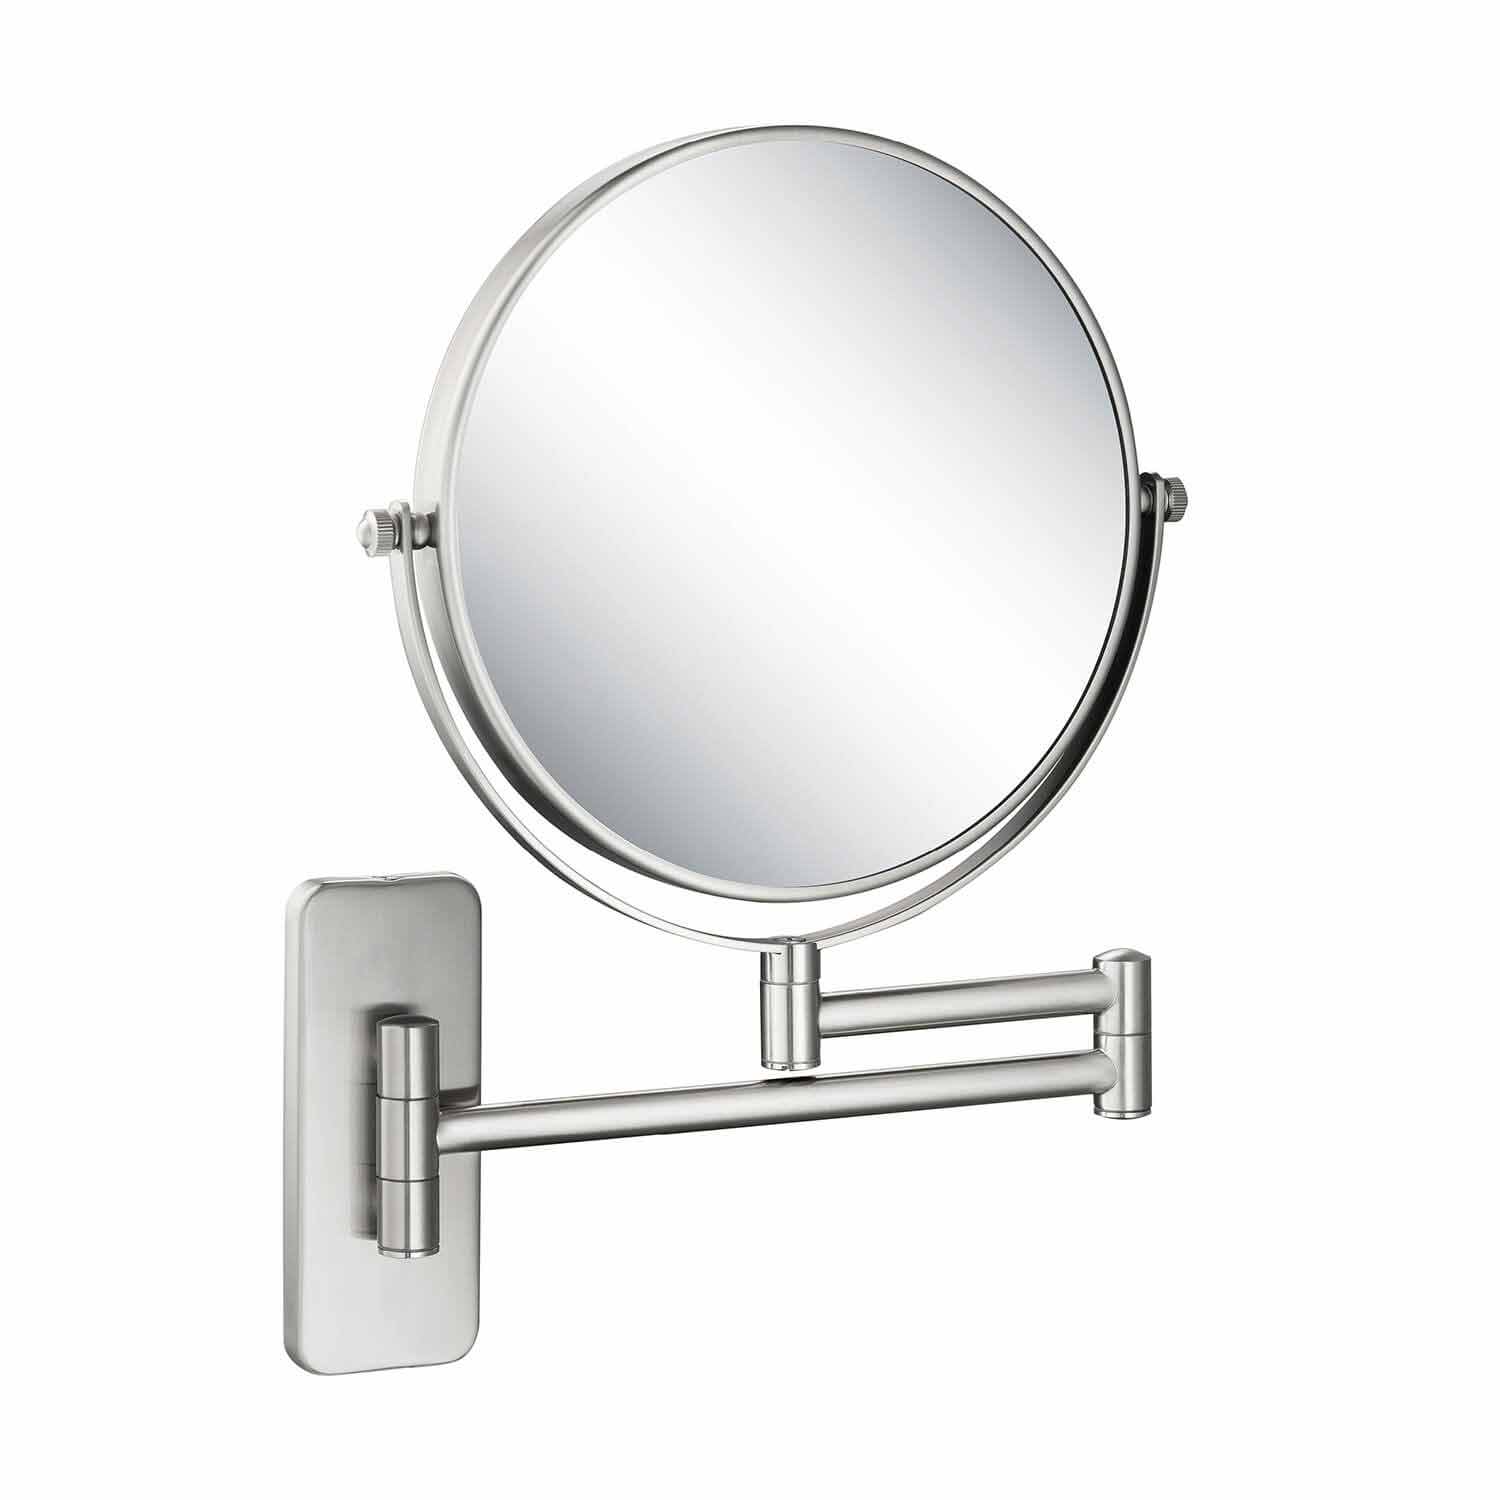 KIBI Circular Magnifying Makeup/Shaving Mirror – KMM100